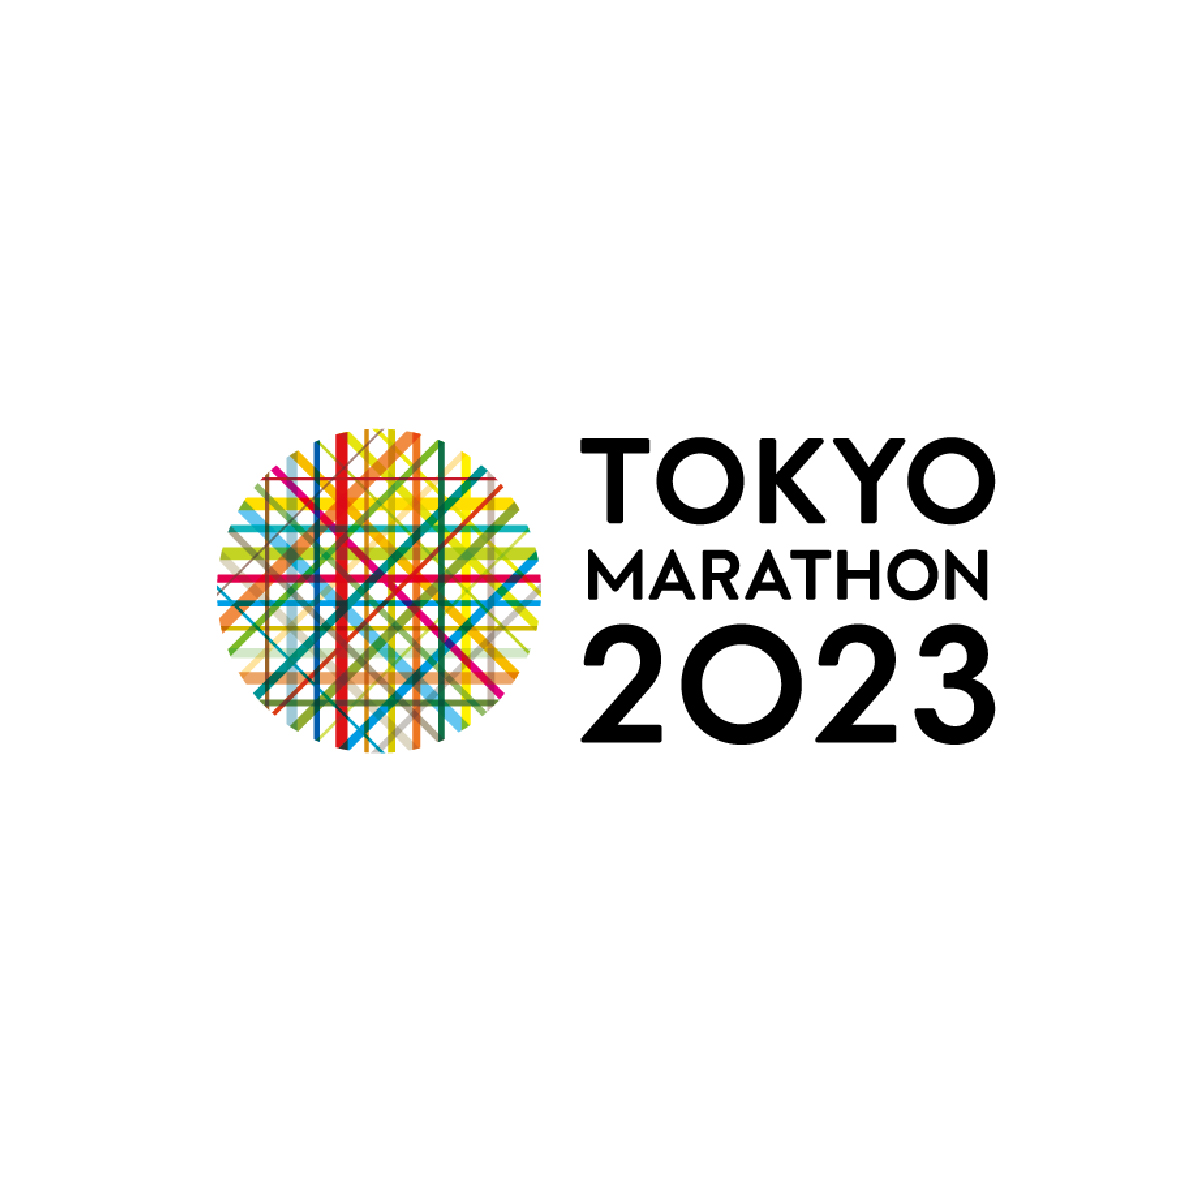 Available Services TOKYO MARATHON 2023